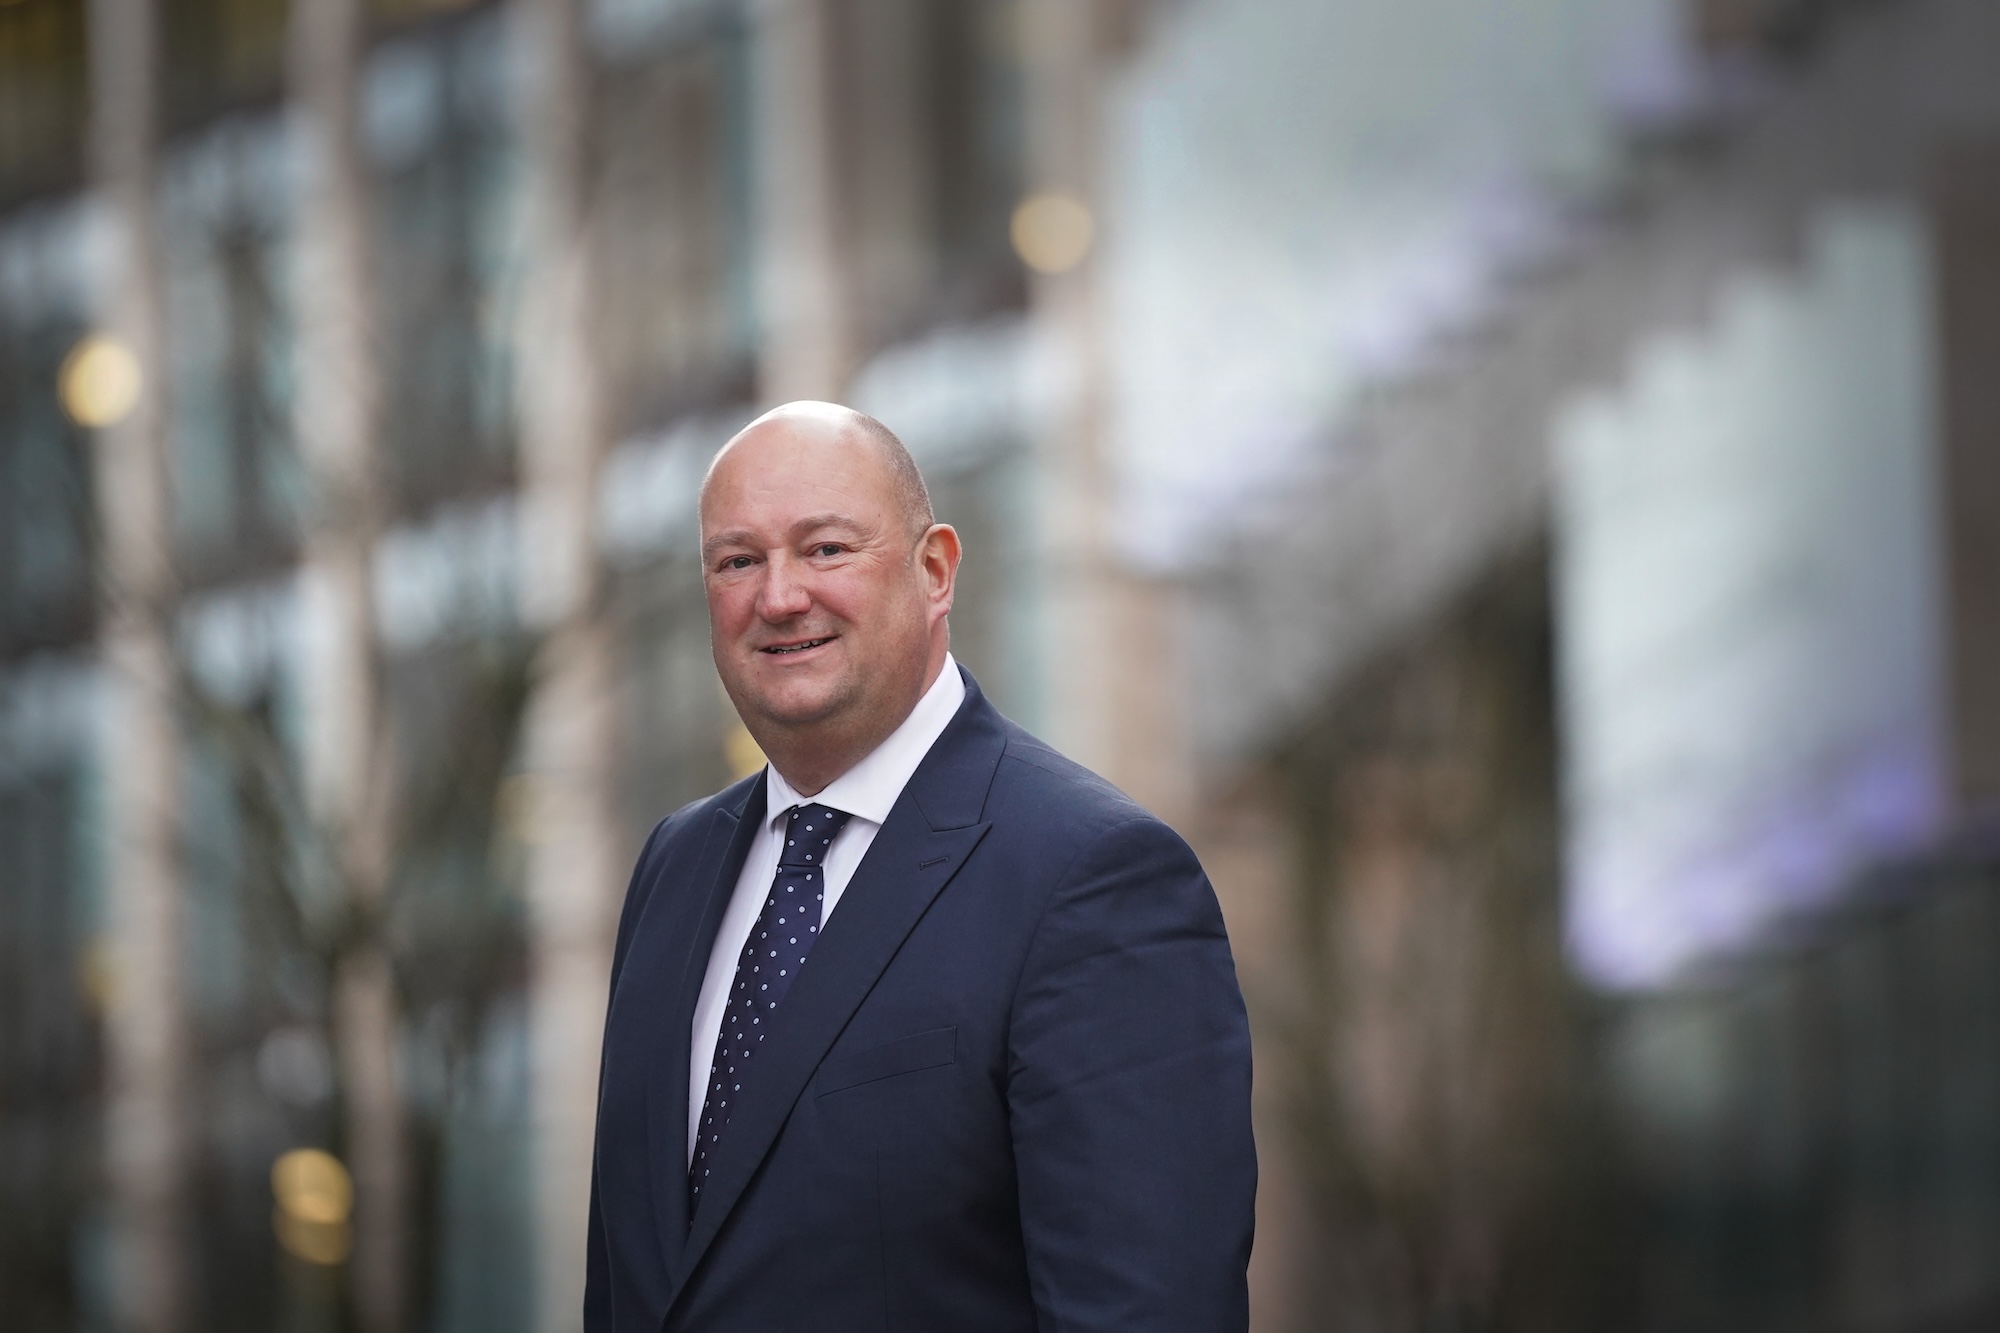 Martin Hillyer joins Hampden & Co as intermediary relationship director